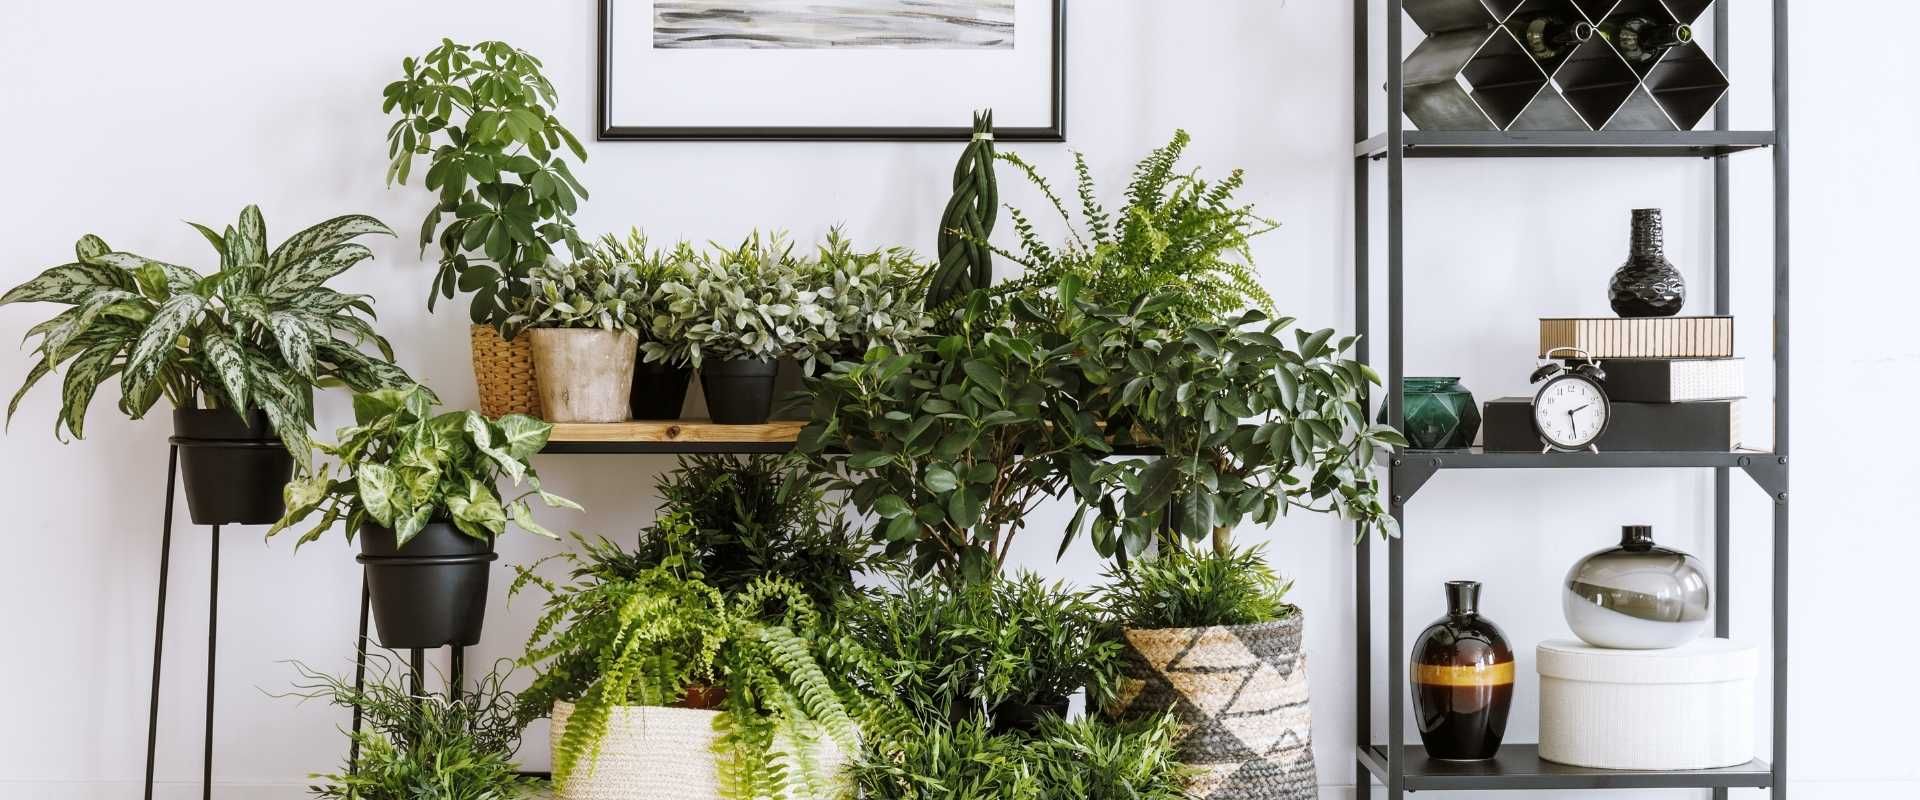 Go green with houseplants